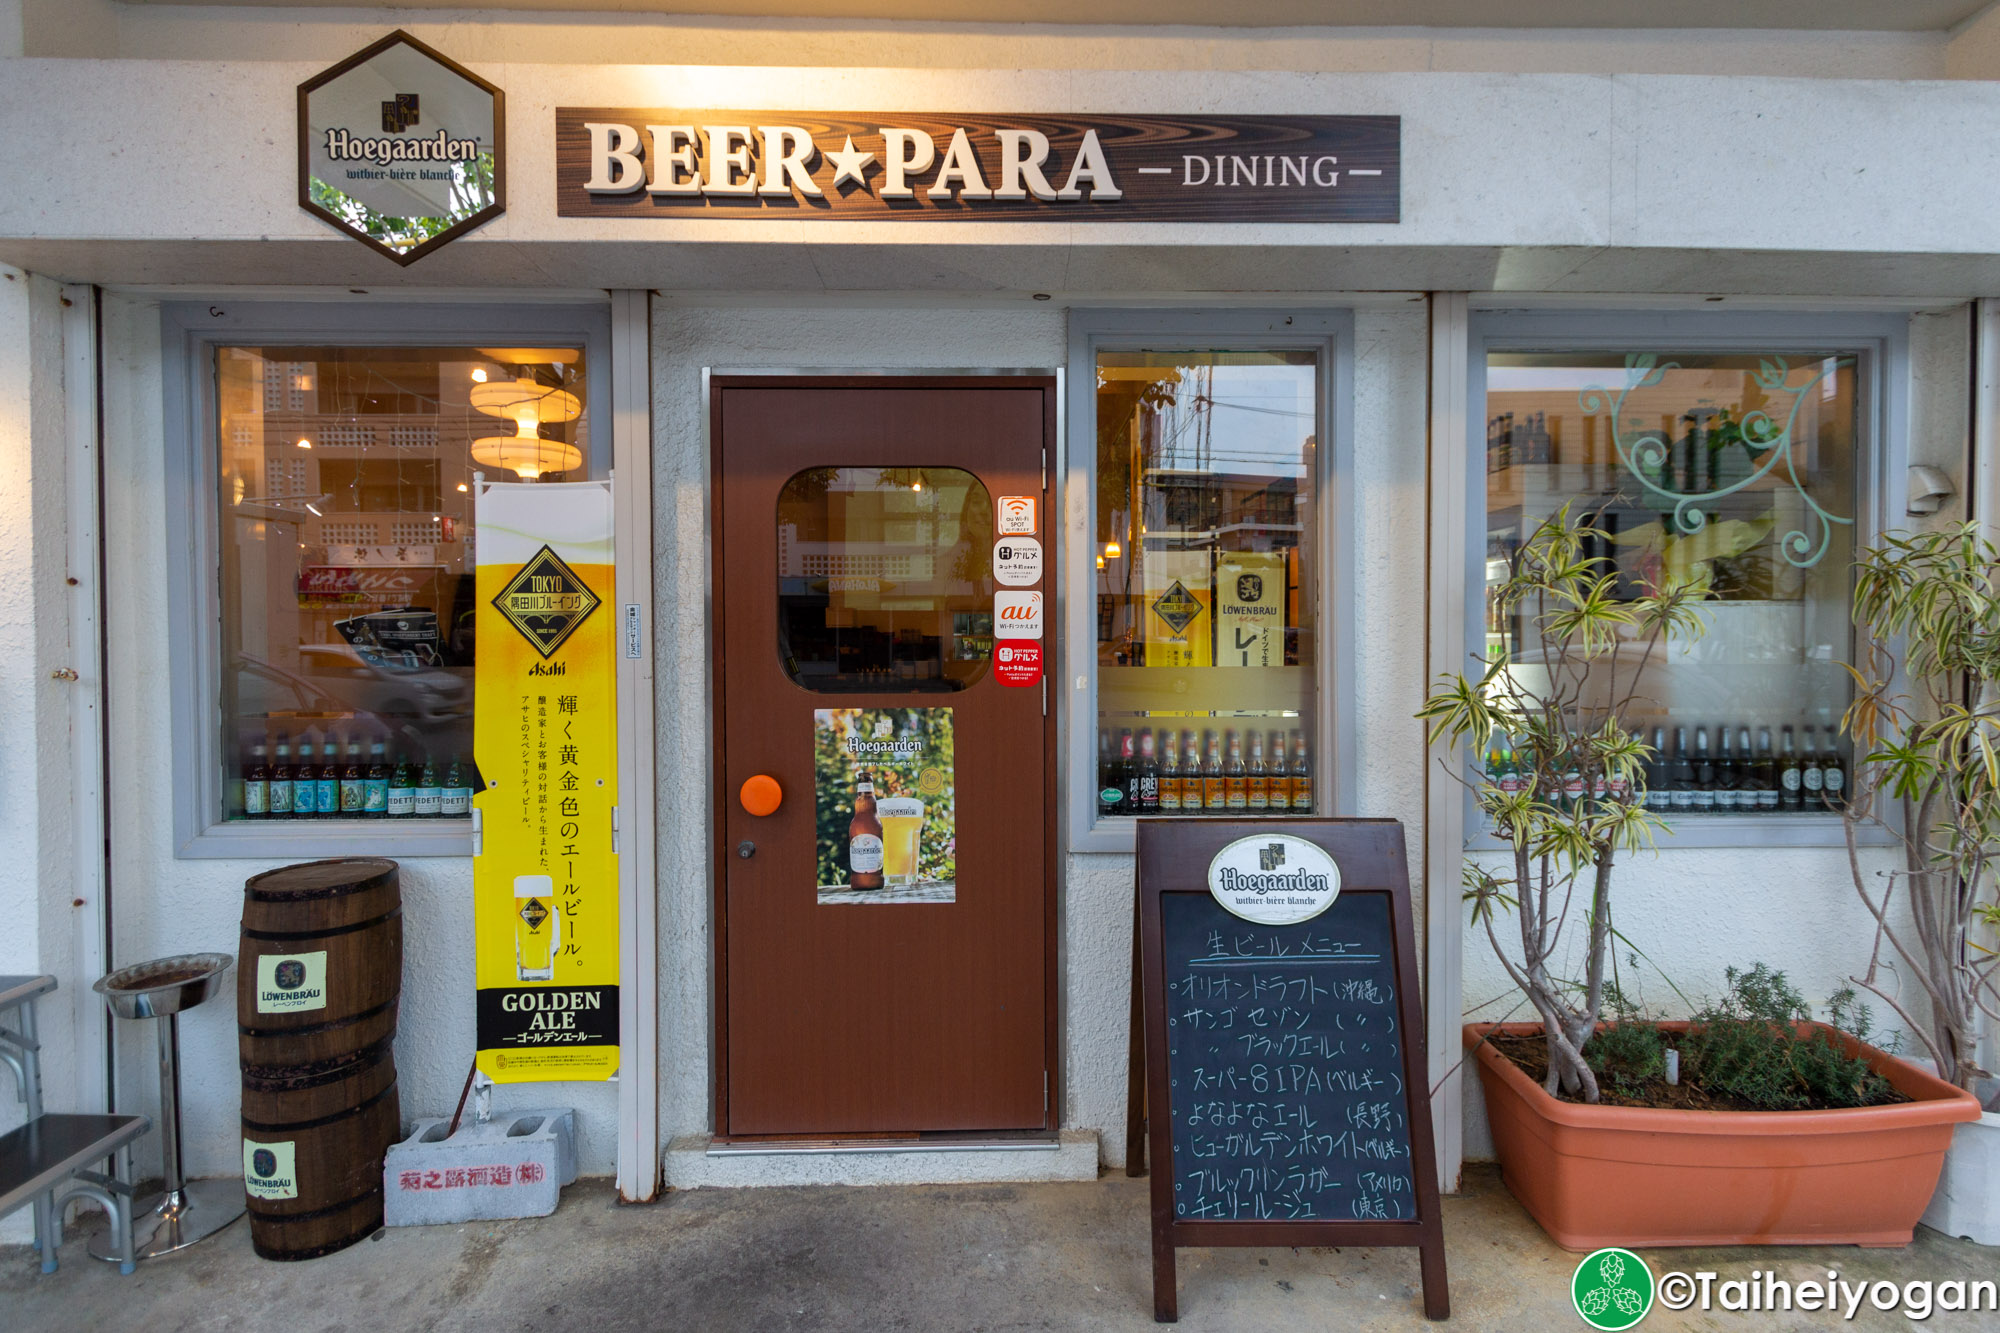 Beerpara Dining - Entrance